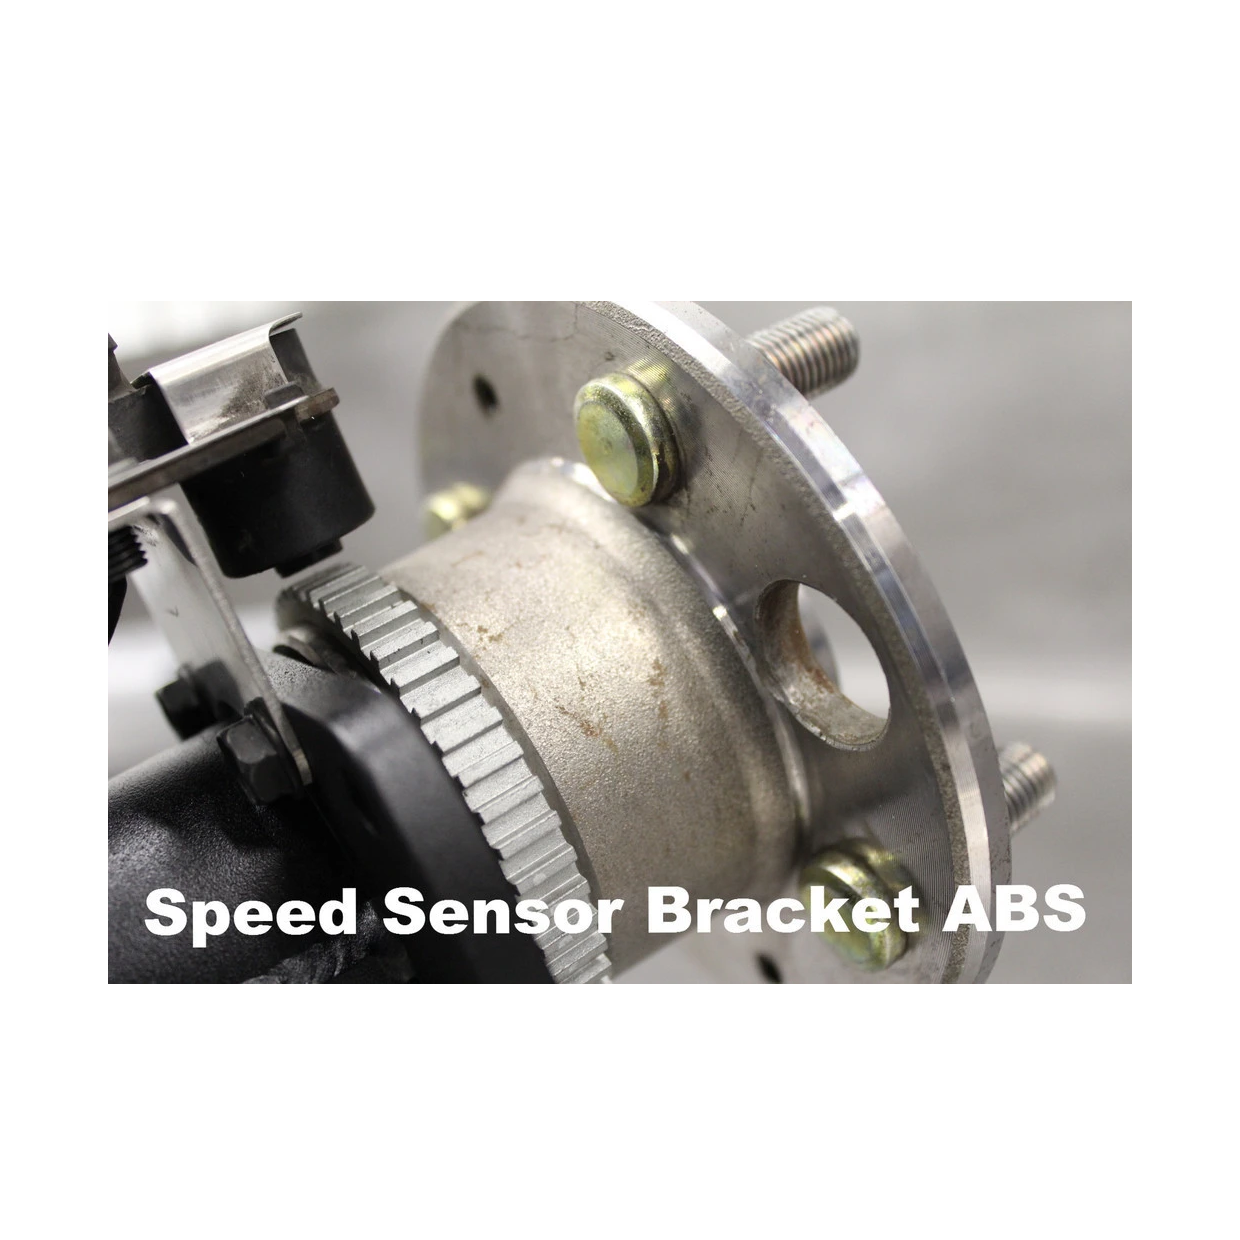 Kaizenspeed Speed Sensor Bracket - ABS